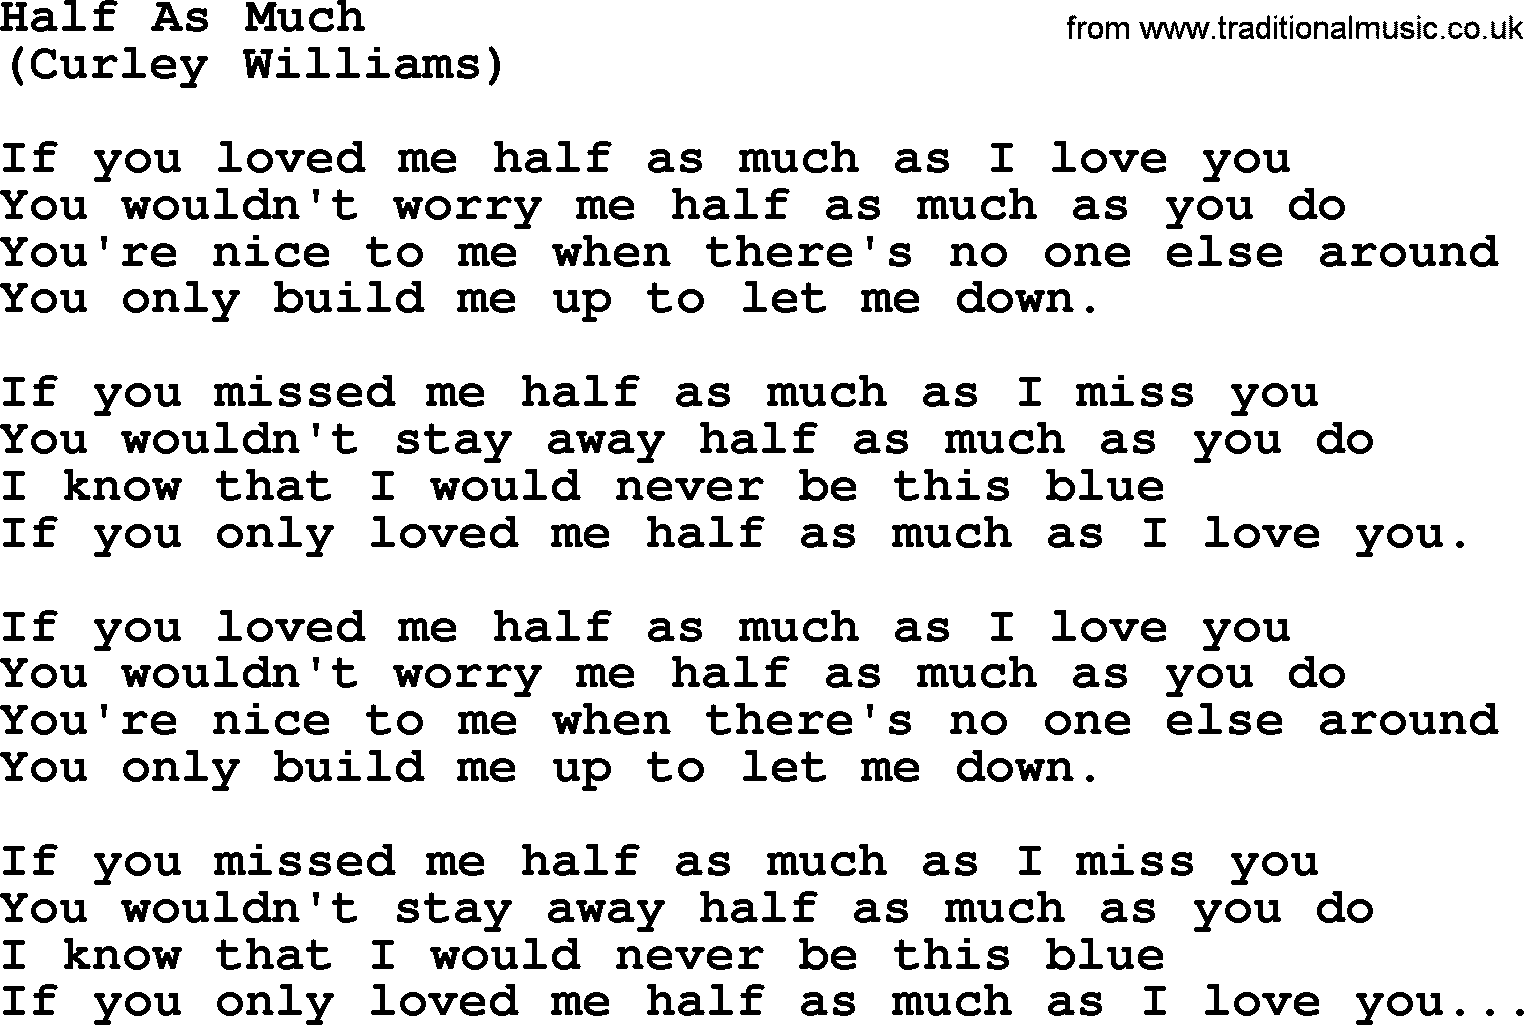 George Jones song: Half As Much, lyrics